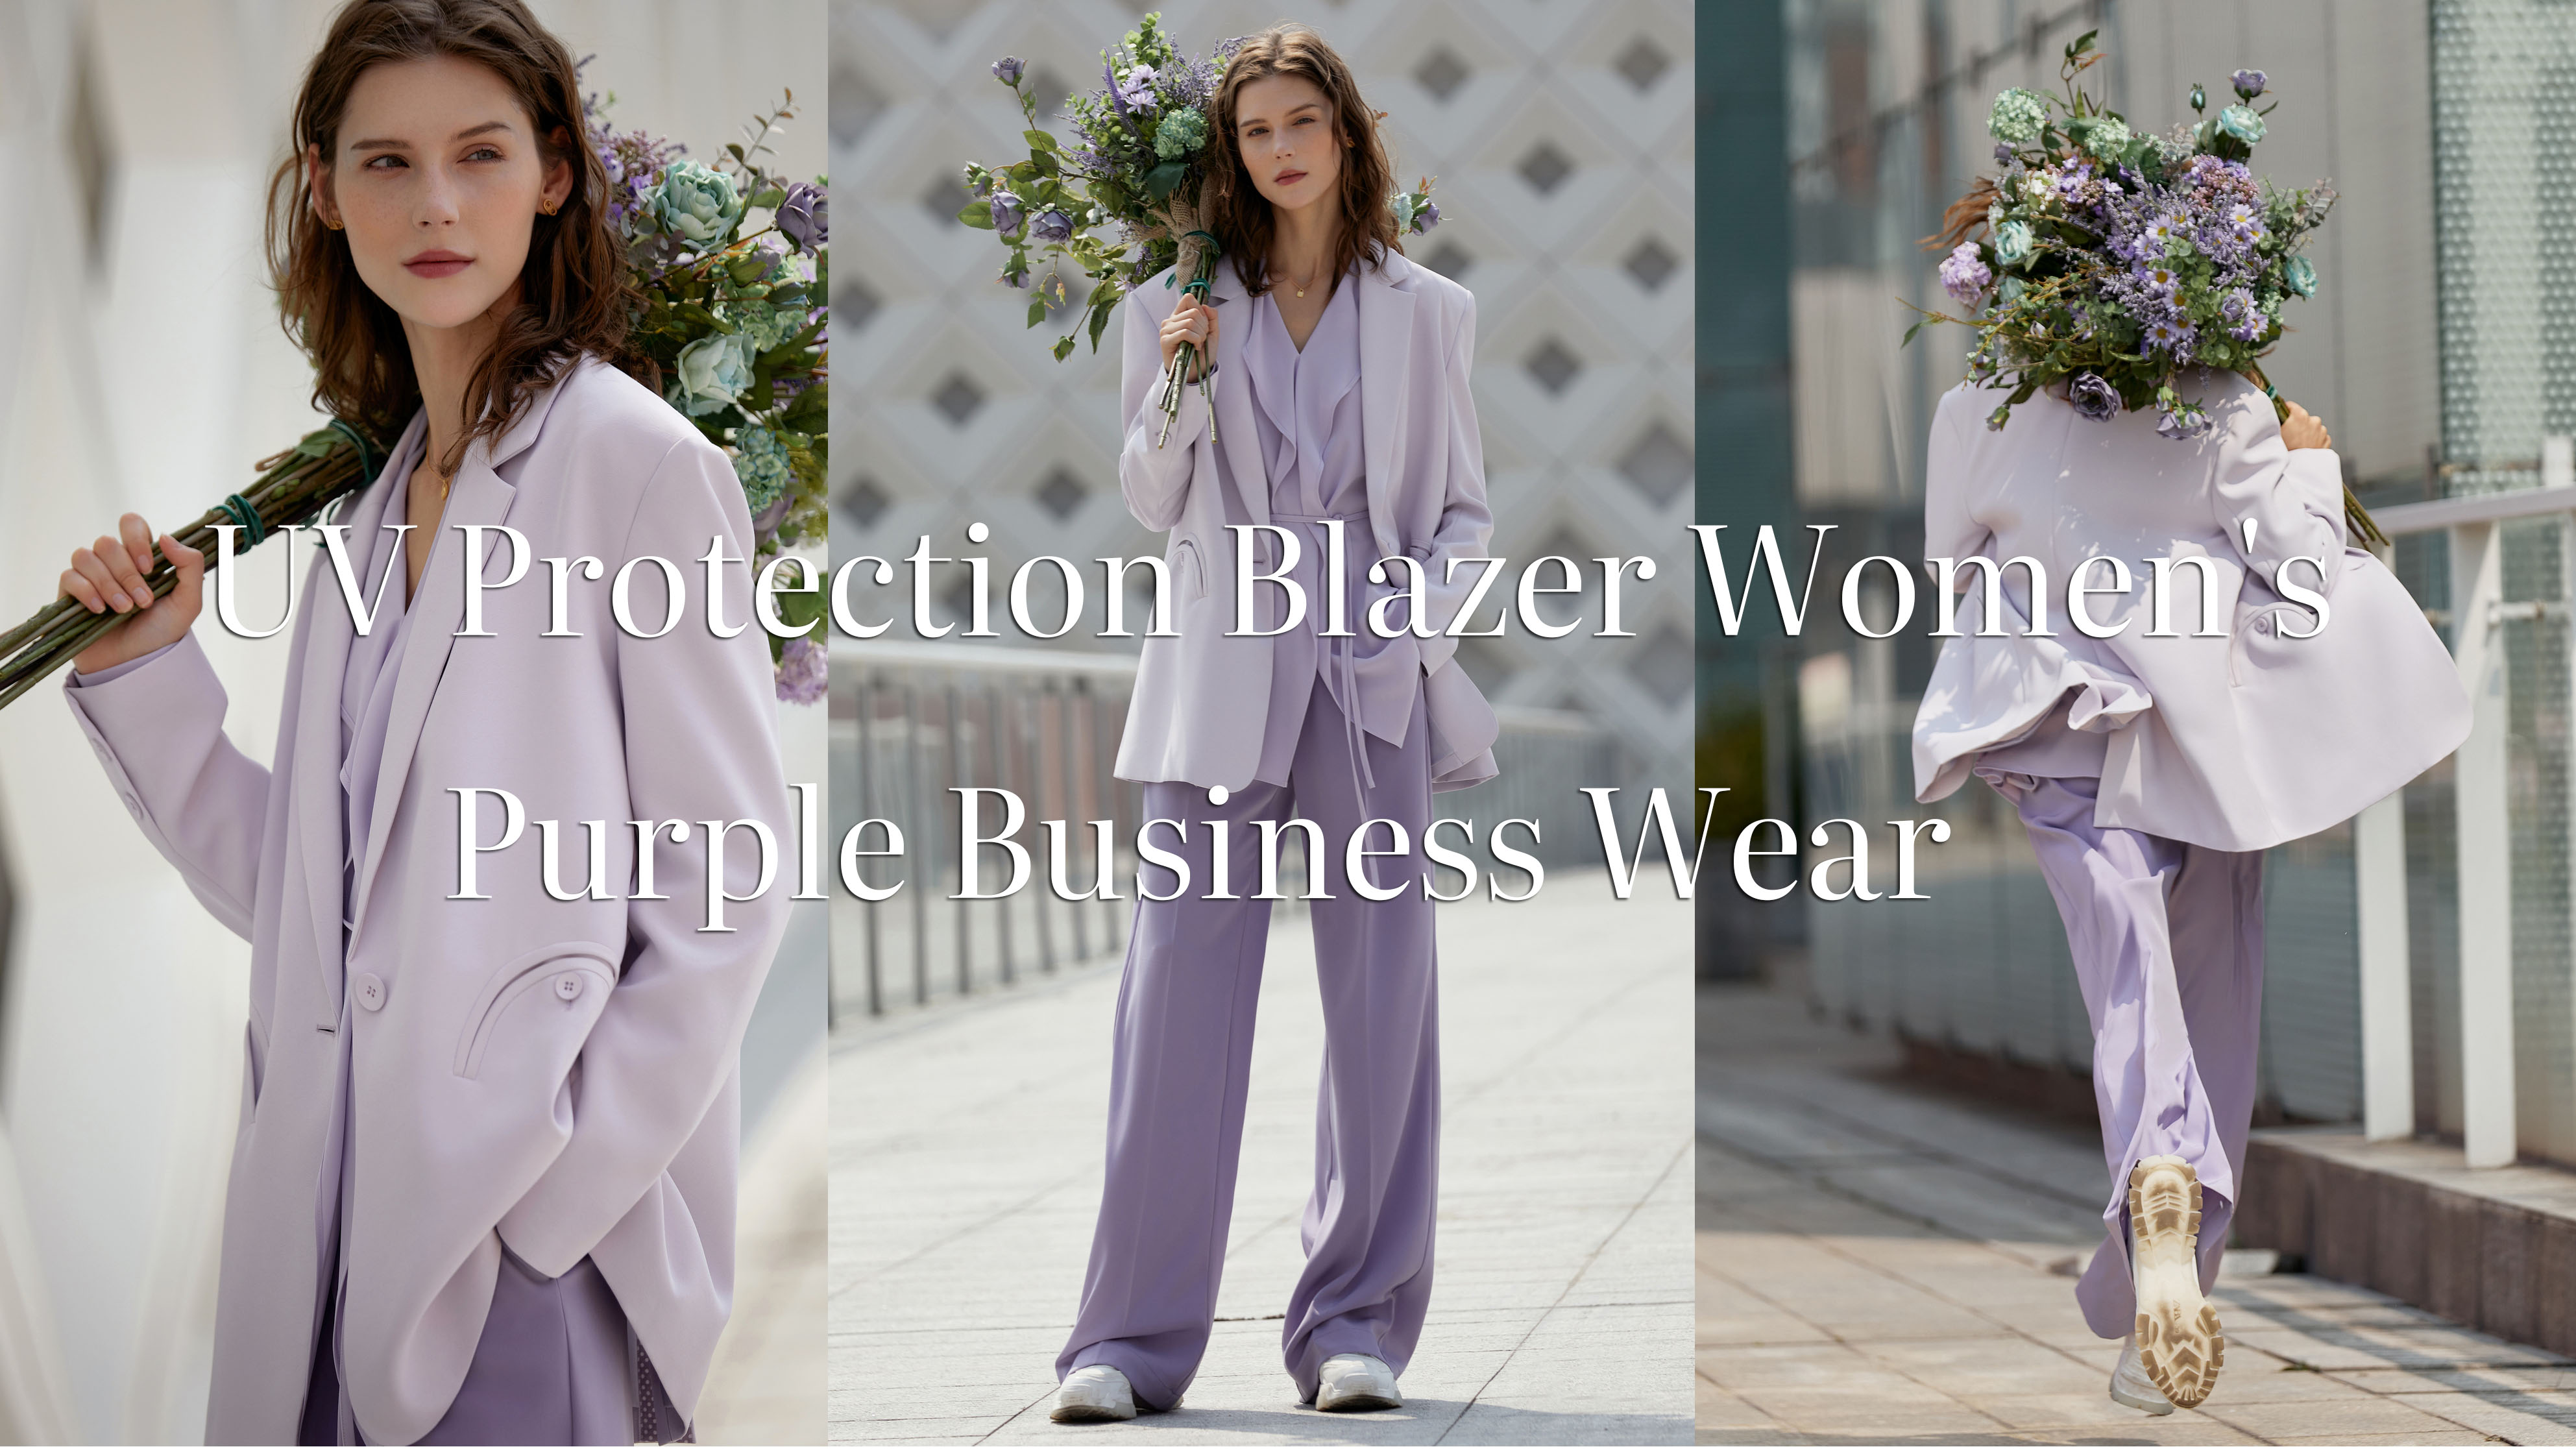 Quality UV Protection Blazer Women's Purple Business gere Manufacturer |Auschalink